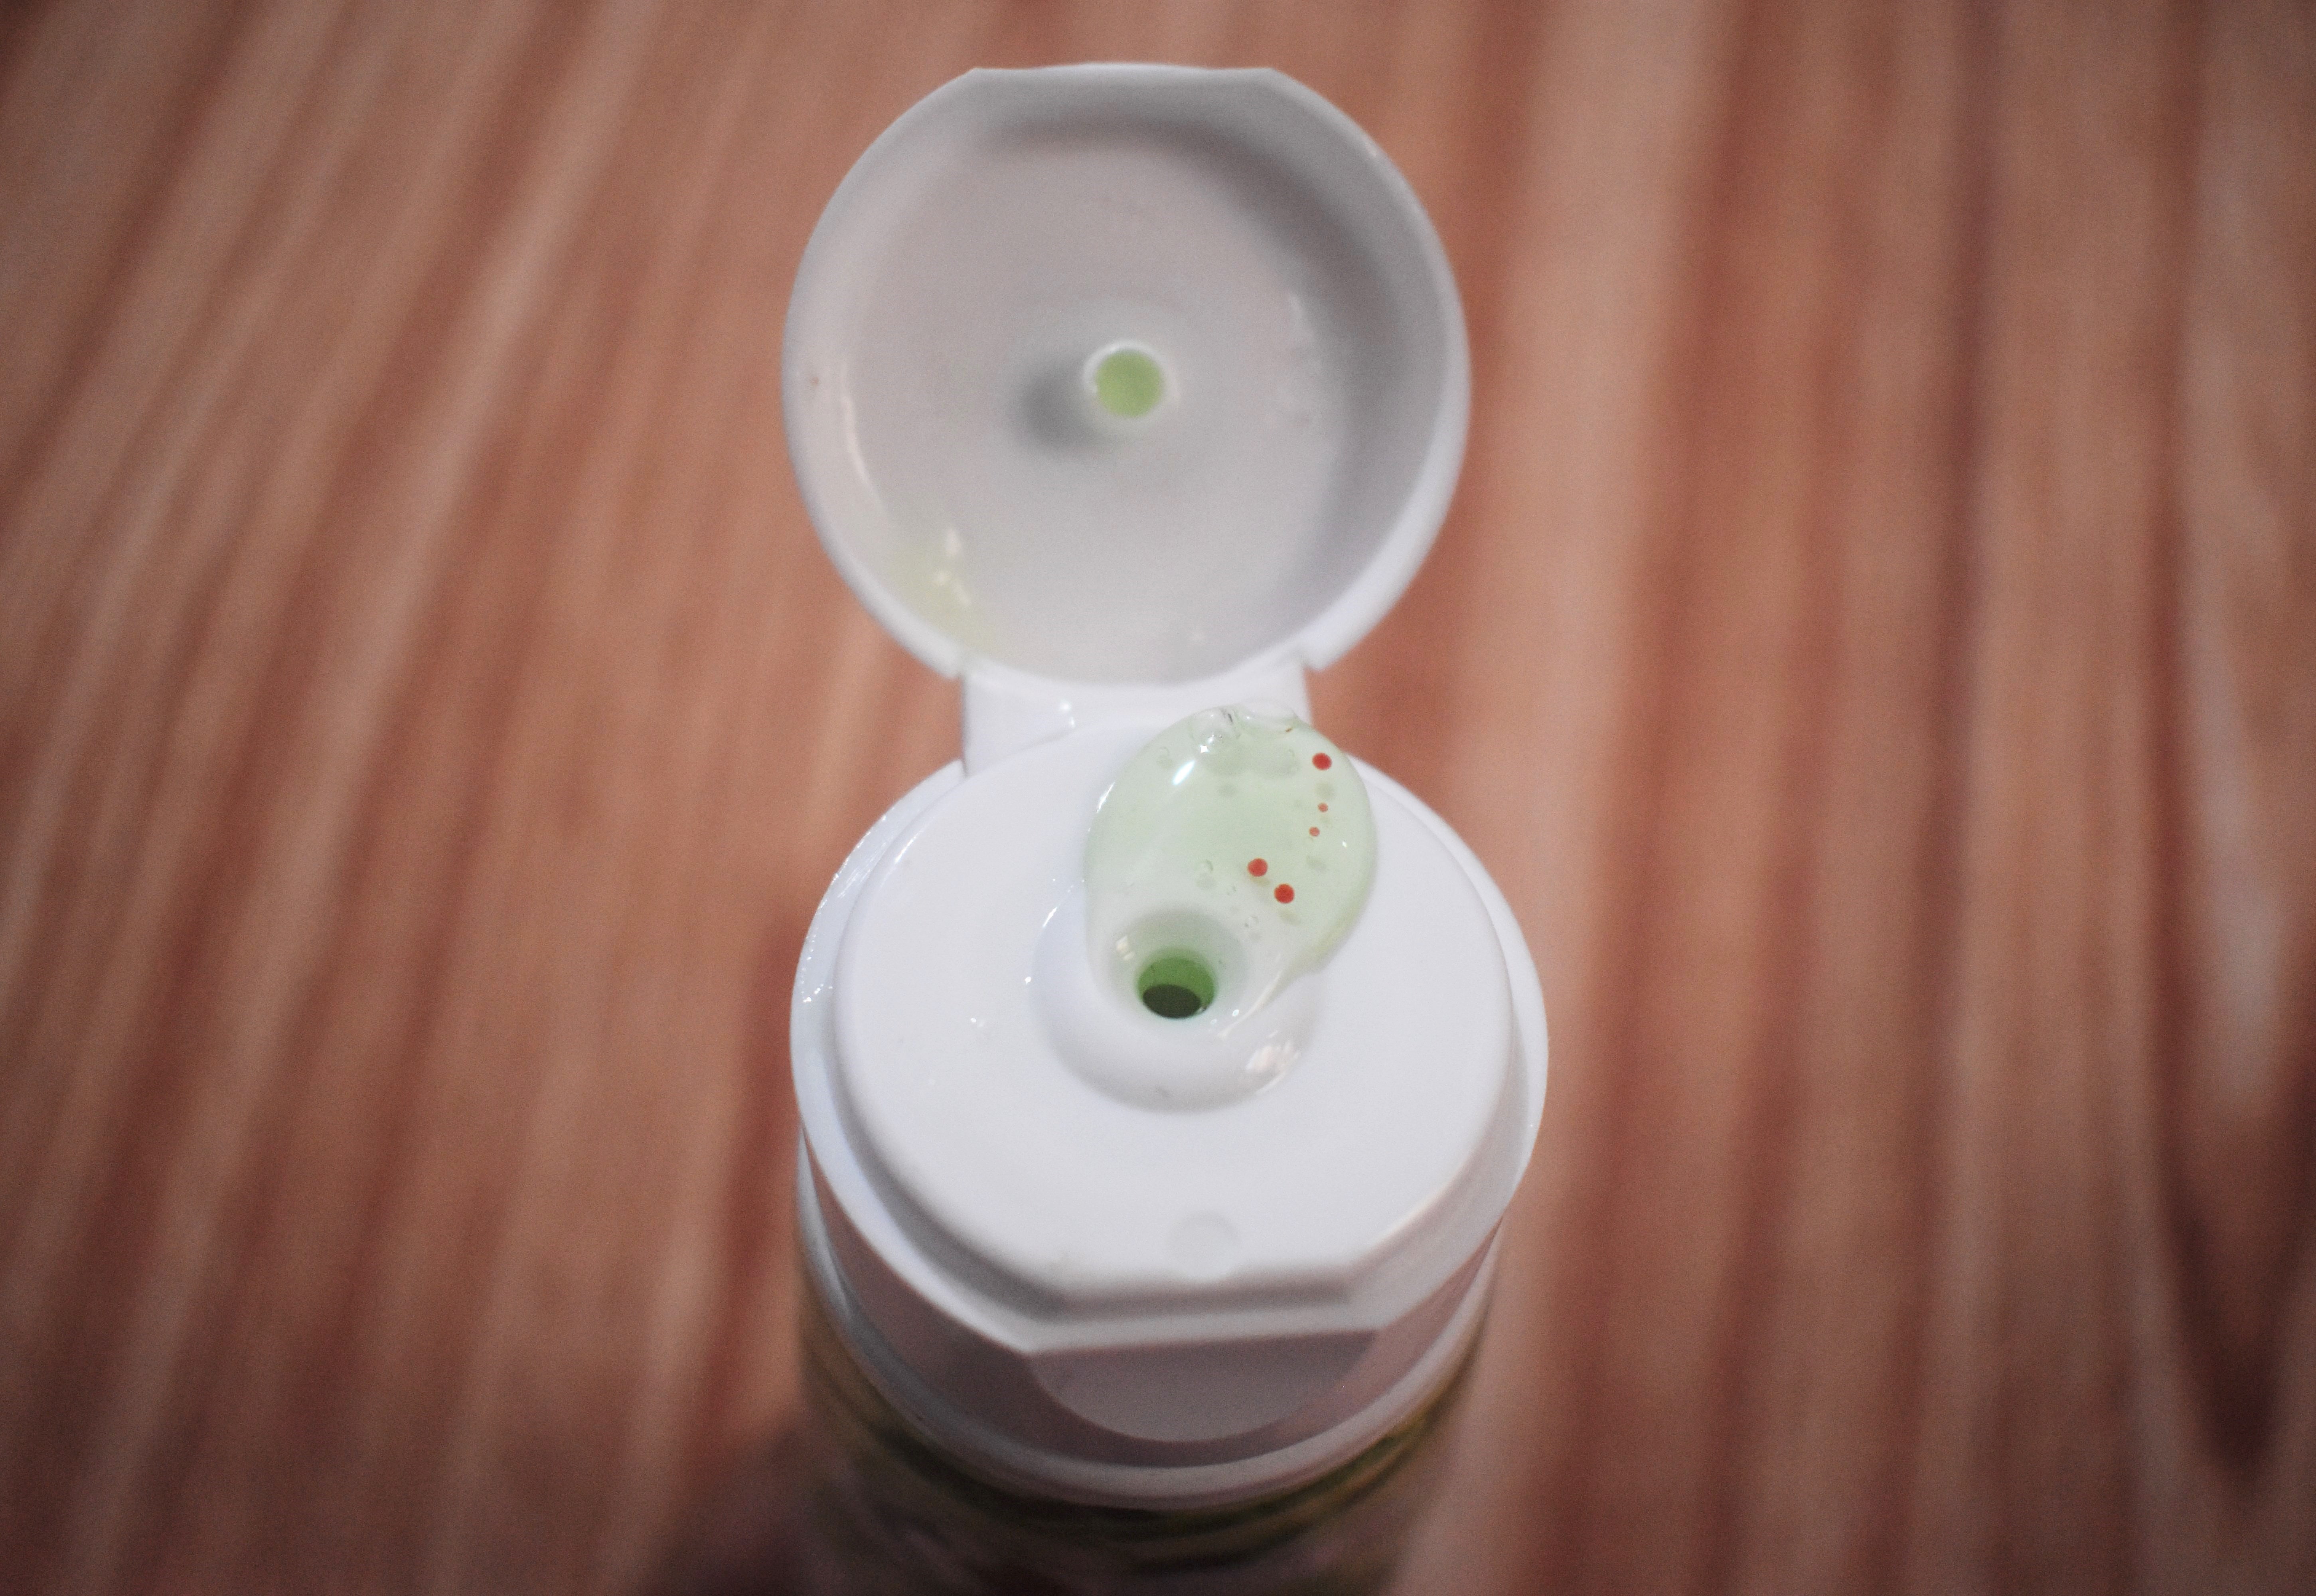 Roop Mantra Ayurvedic Medicinal Face Wash Review Cucumber